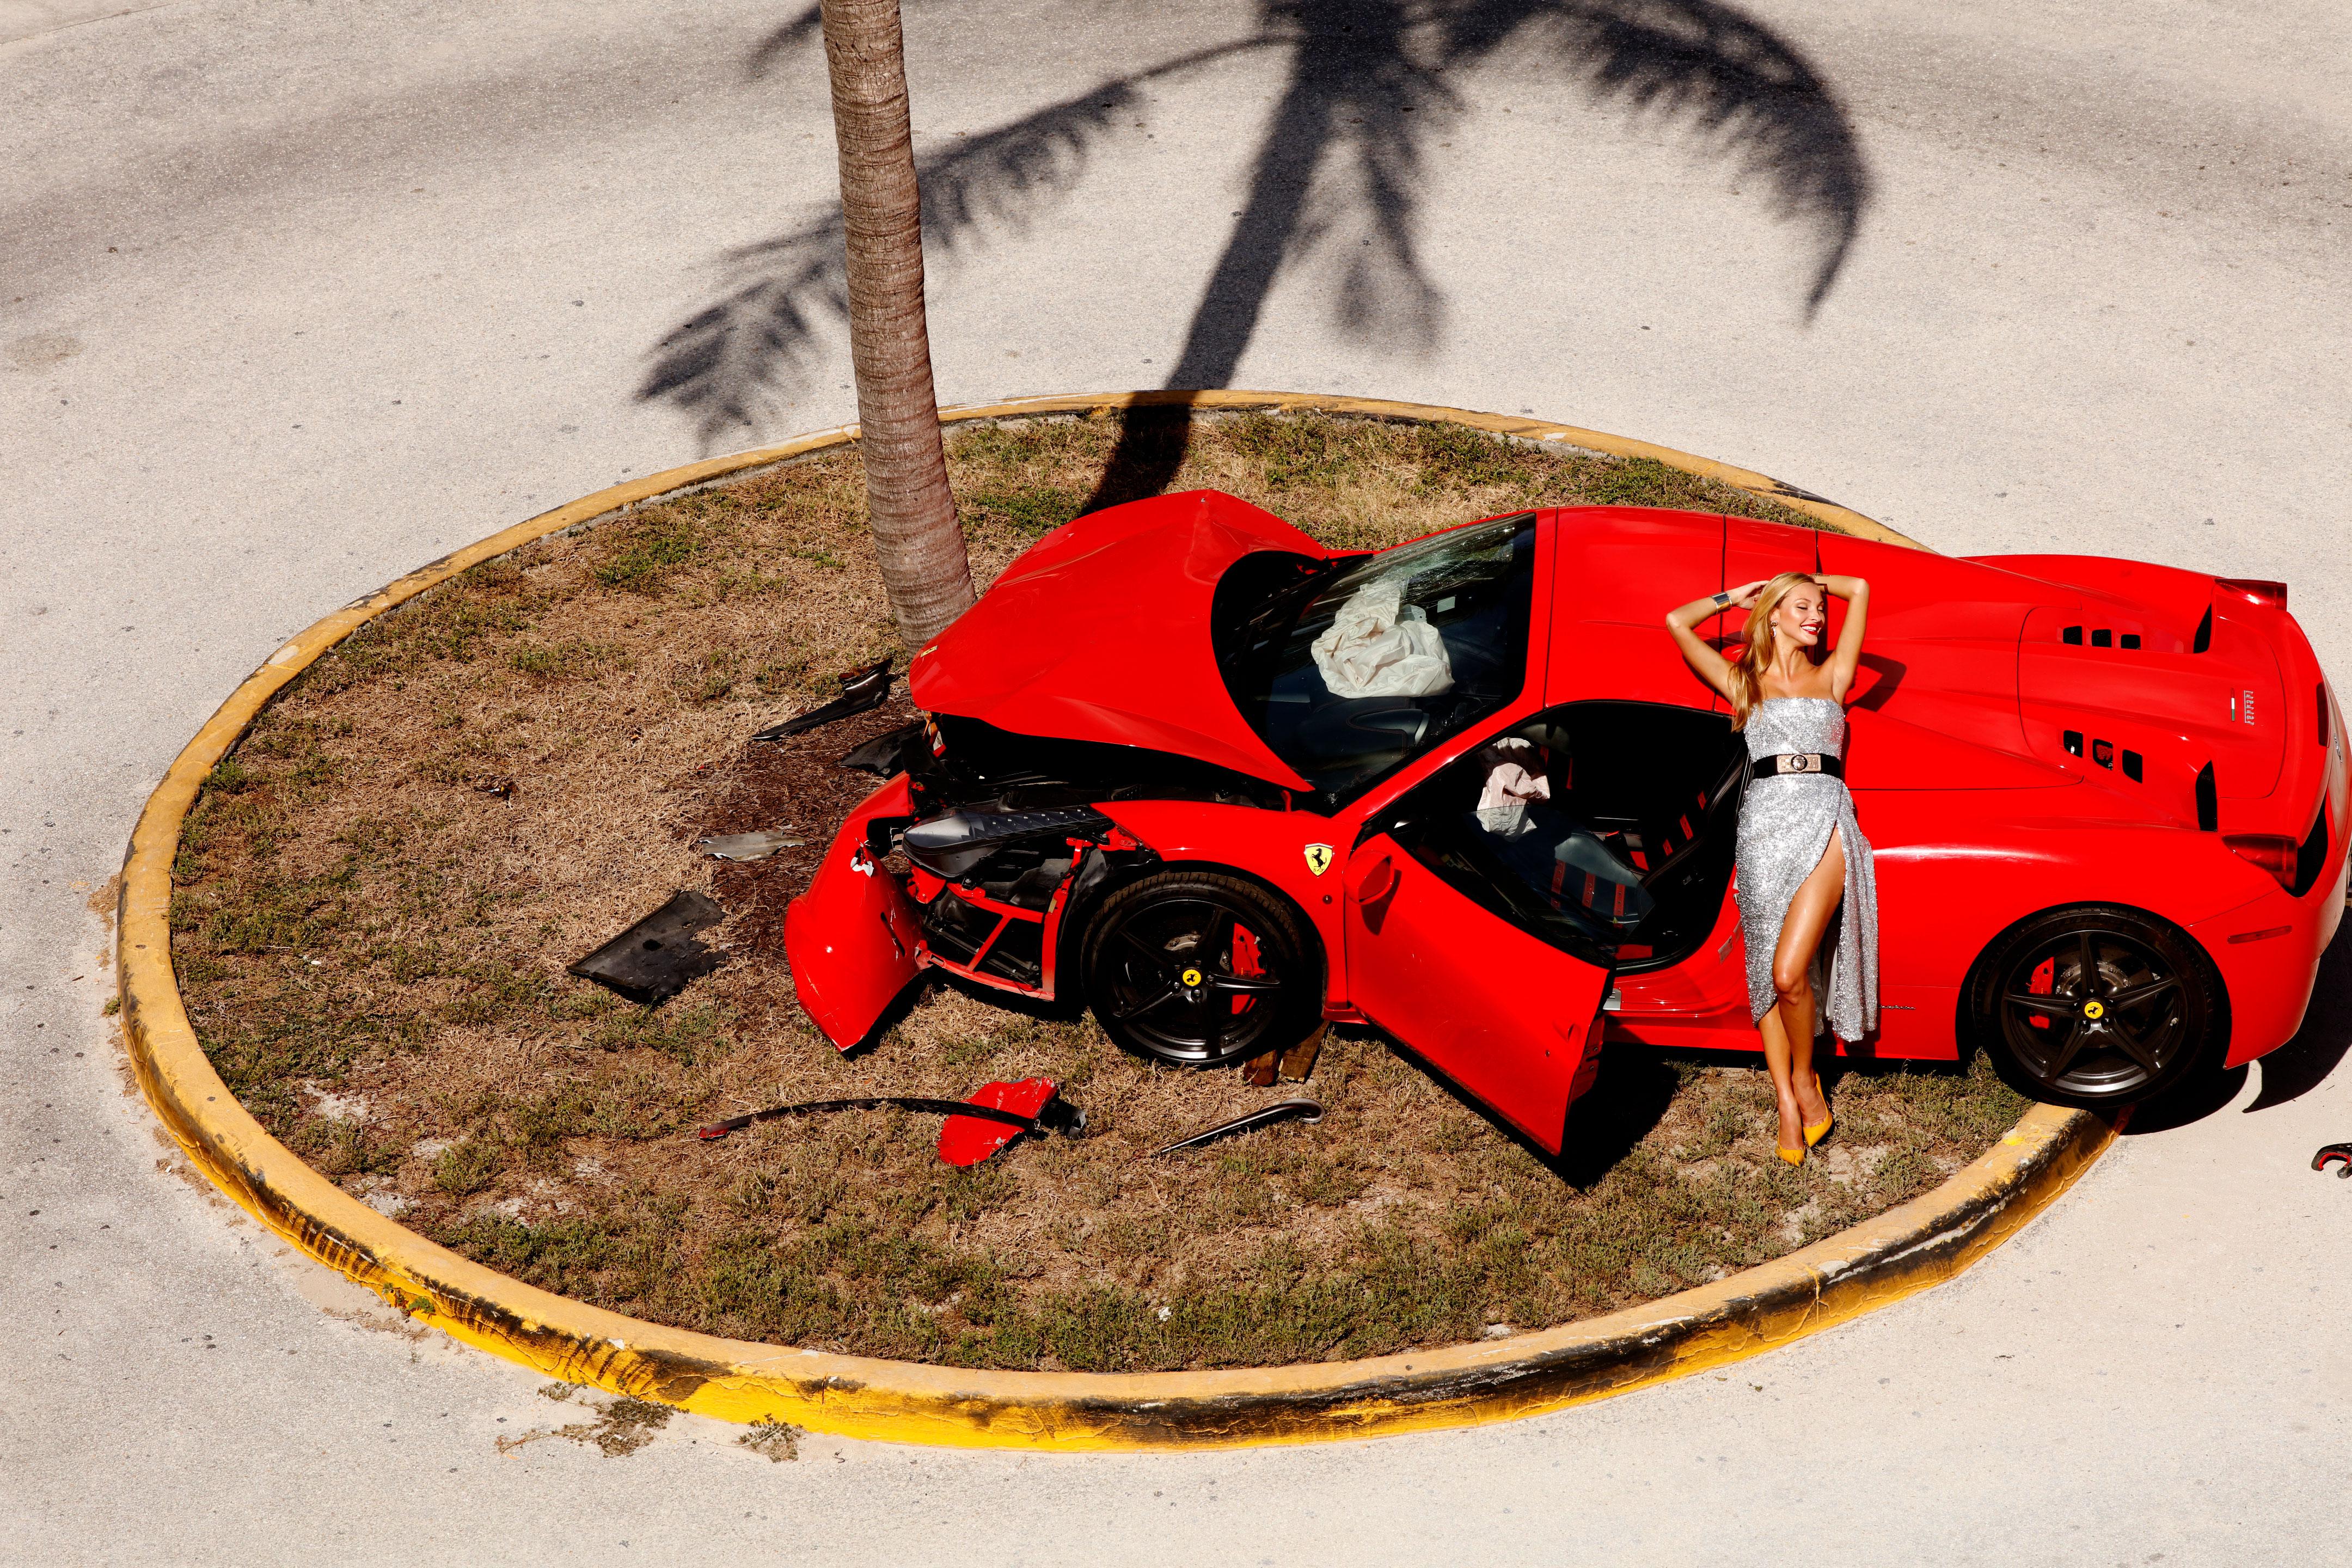 Tony Kelly Color Photograph - Miami Car Crash - Red Ferrari crashed on a Palmtree, fine art photography, 2019